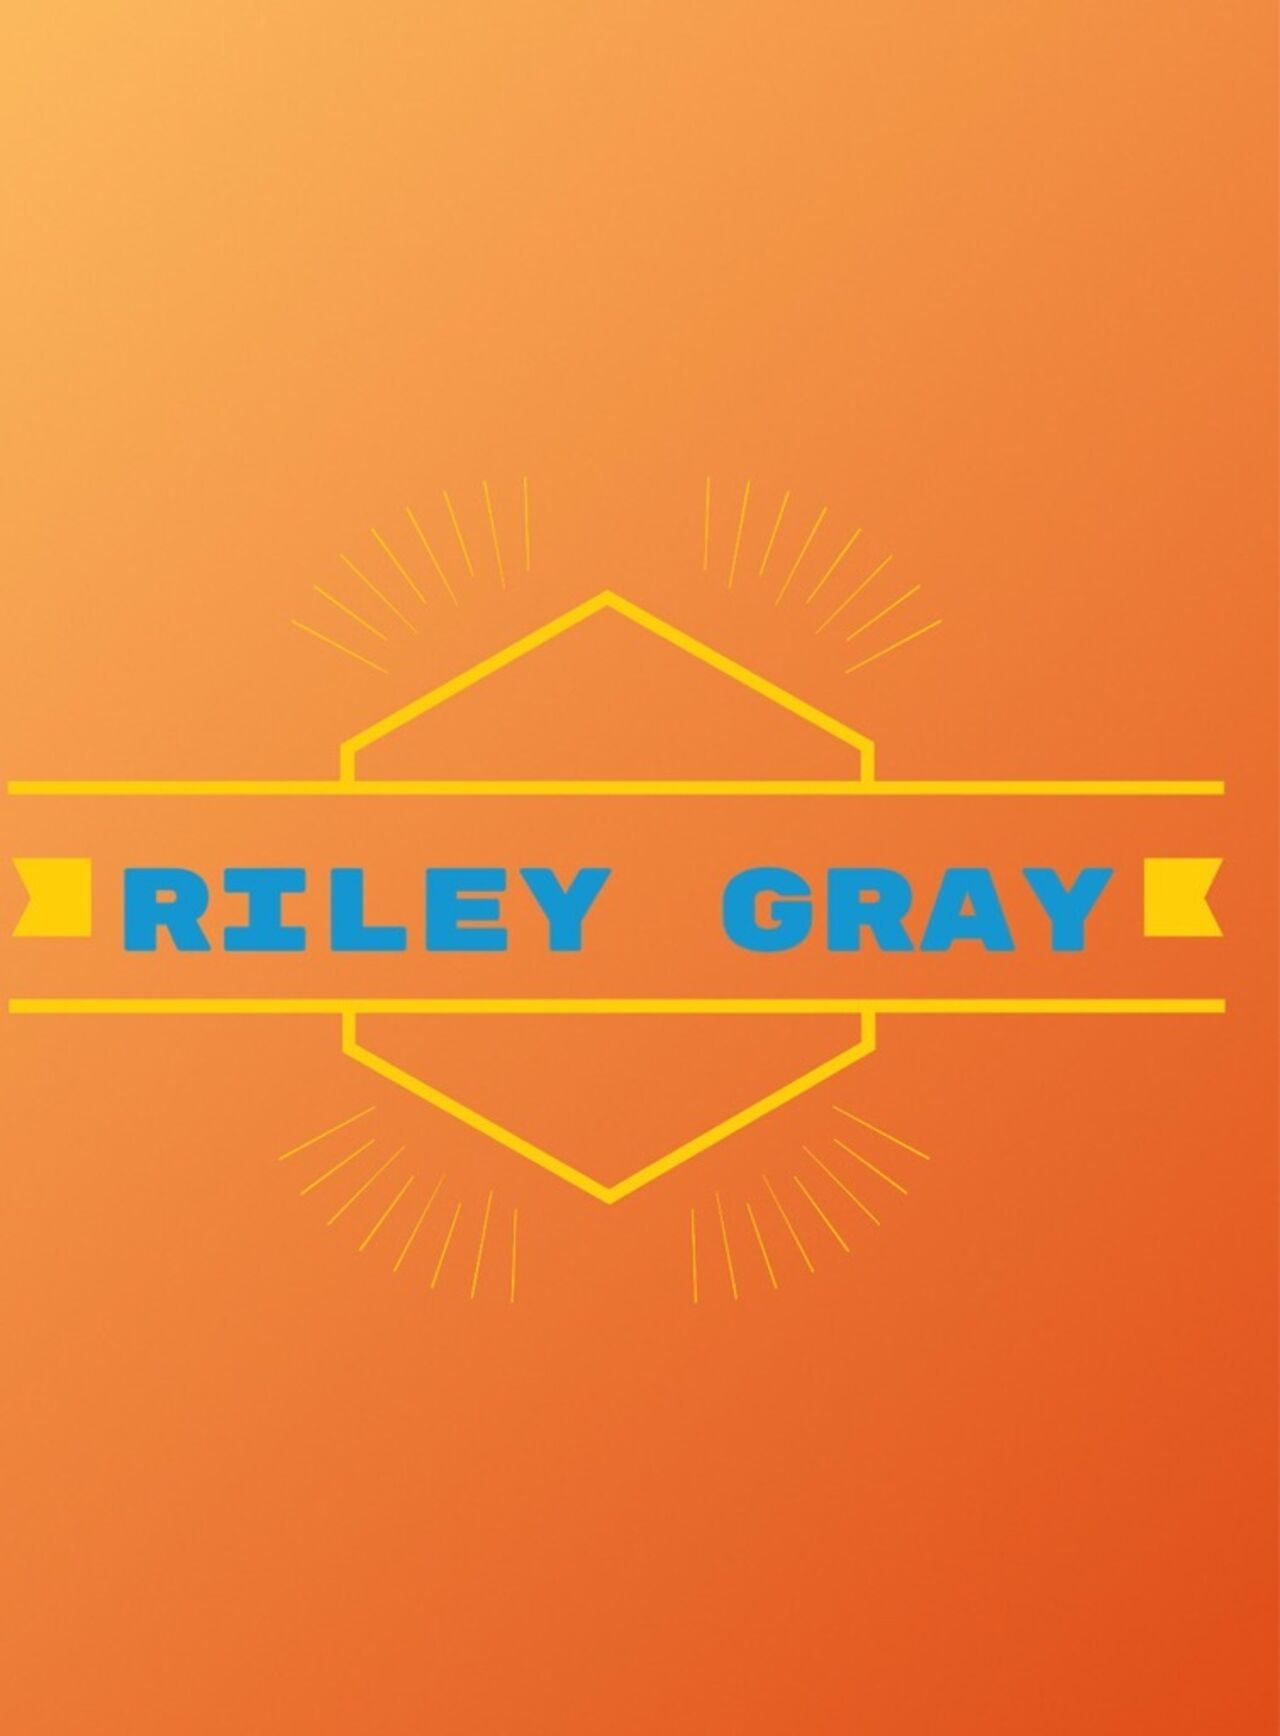 See Riley Gray profile